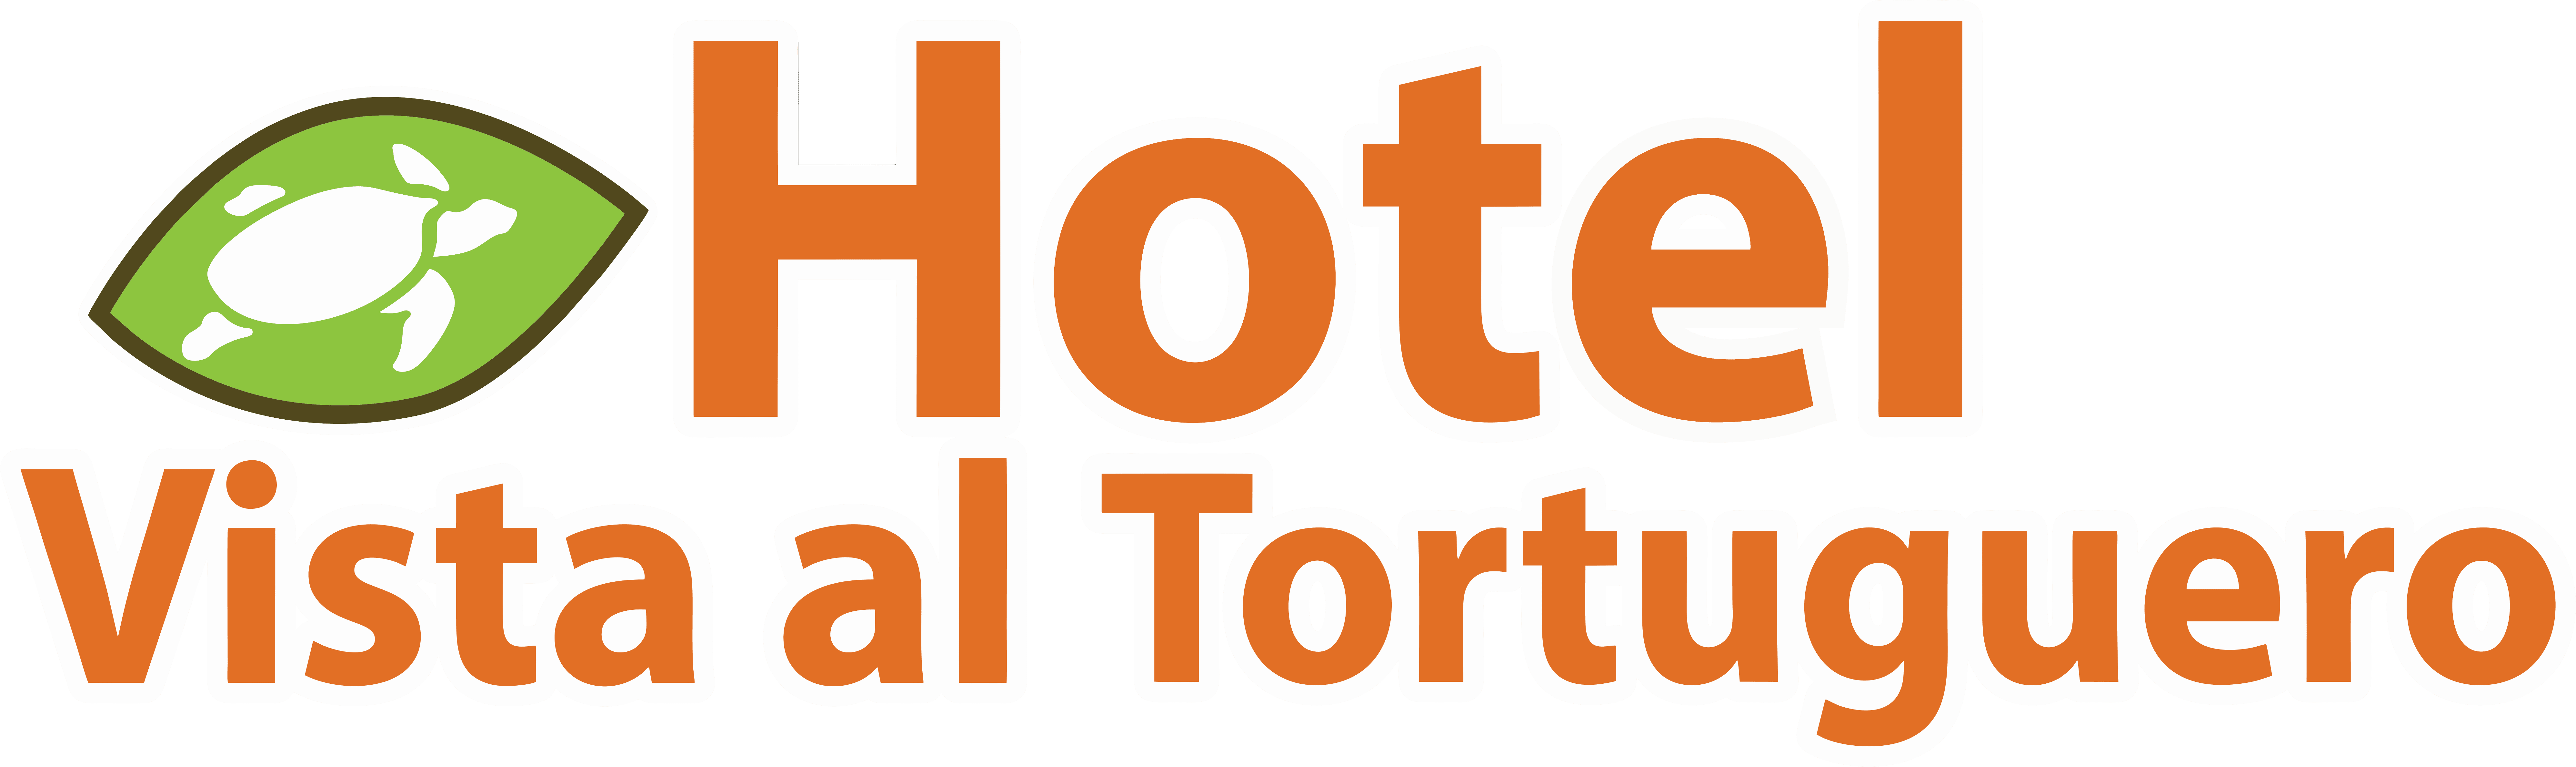 Hotel vista al Tortuguero